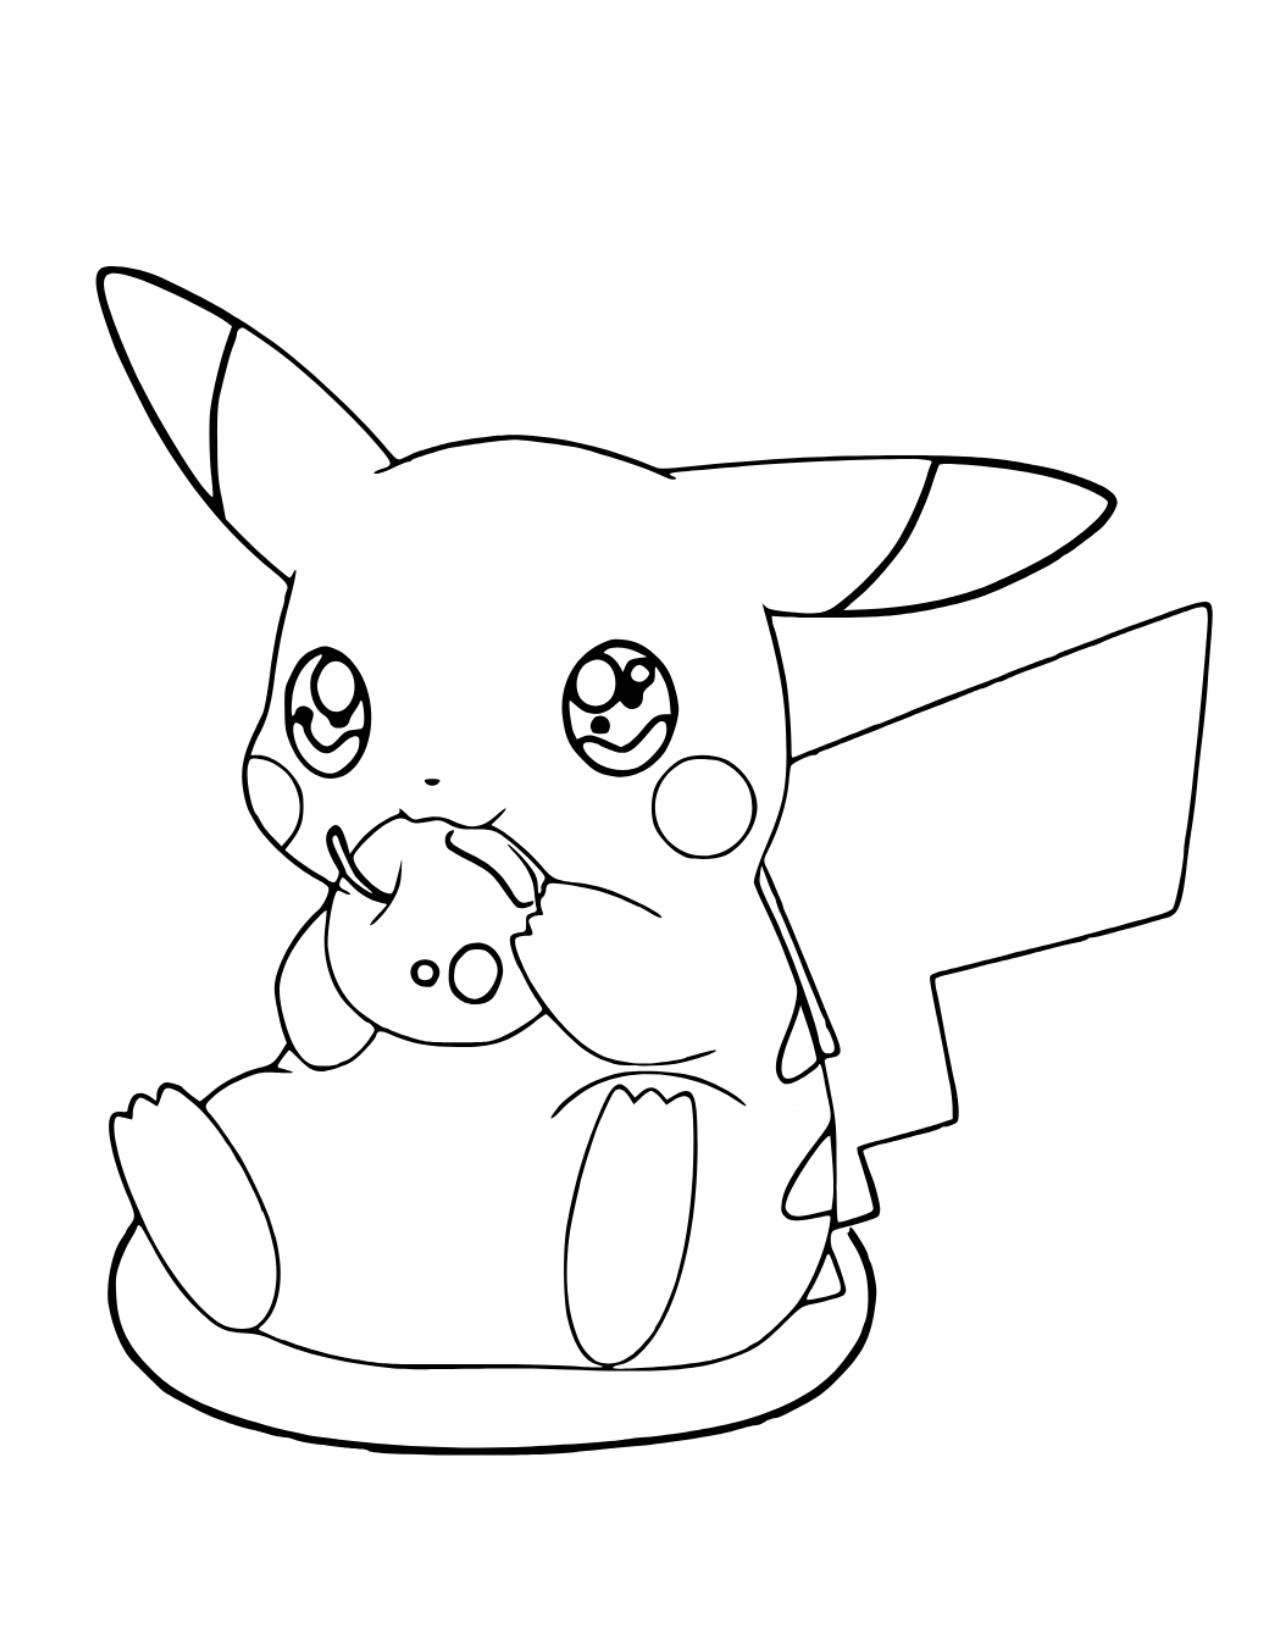 Pikachu eating an apple